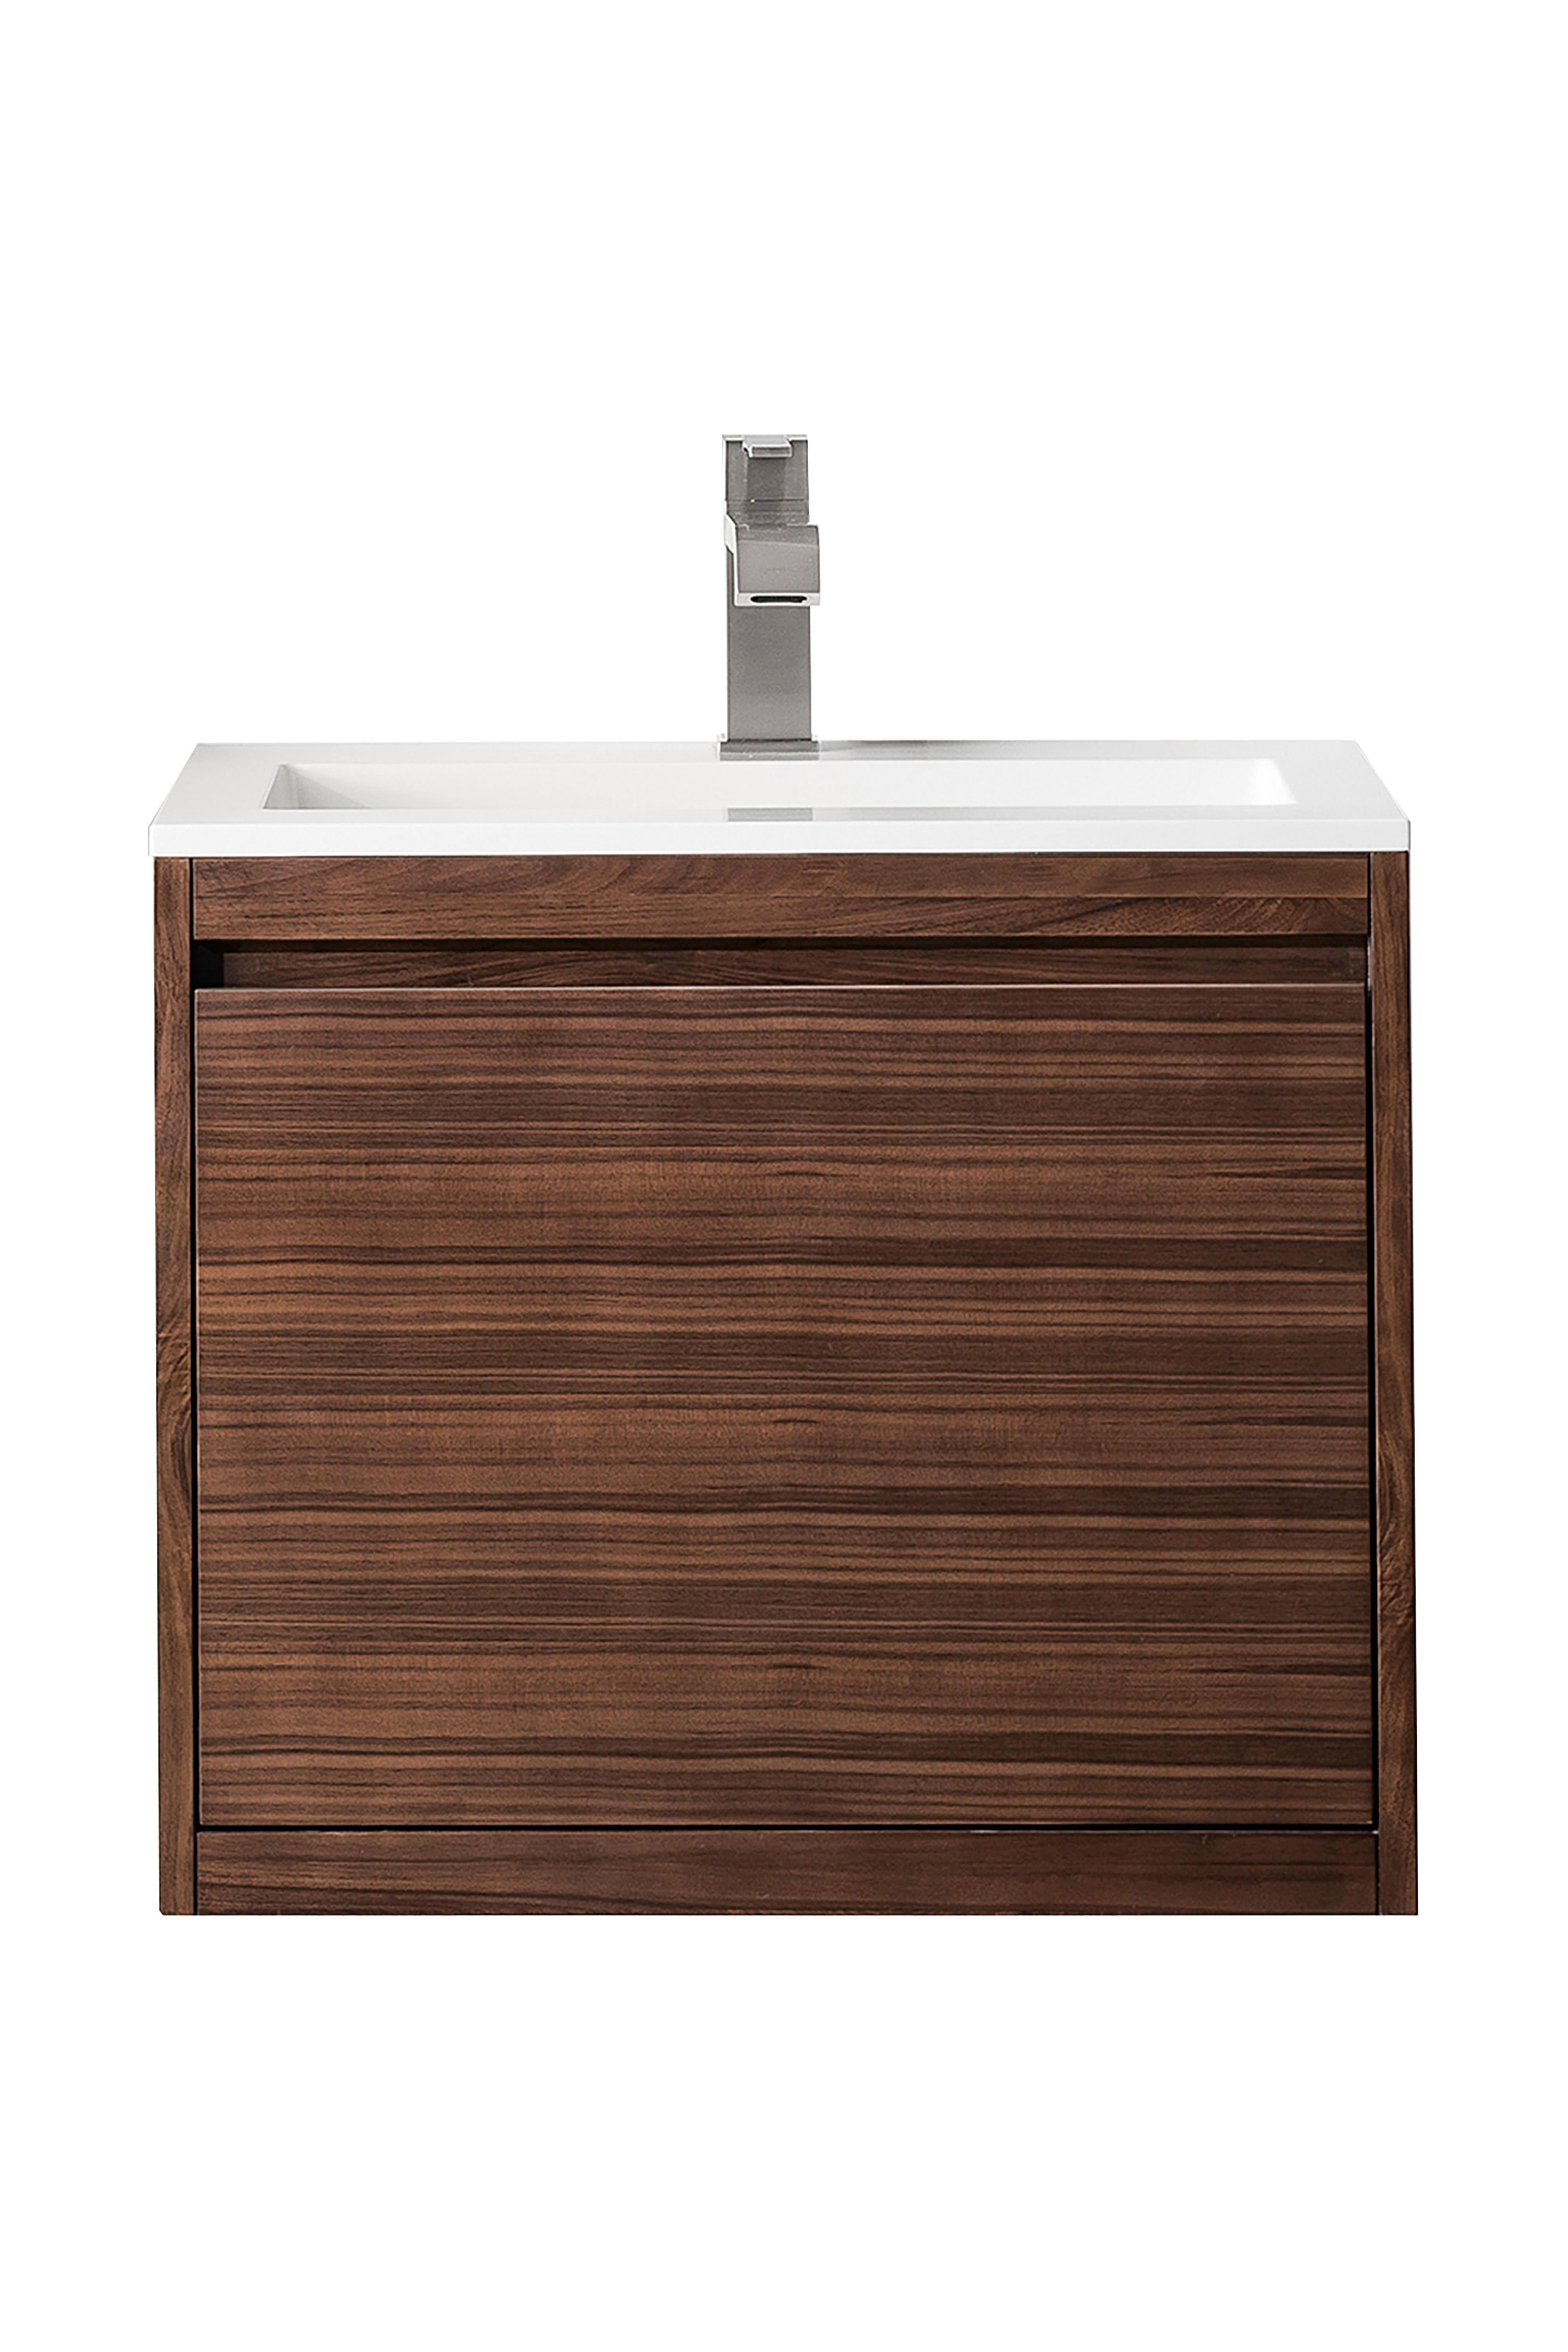 James Martin 801V23.6WLTGW Milan 23.6" Single Vanity Cabinet, Mid Century Walnut w/Glossy White Composite Top